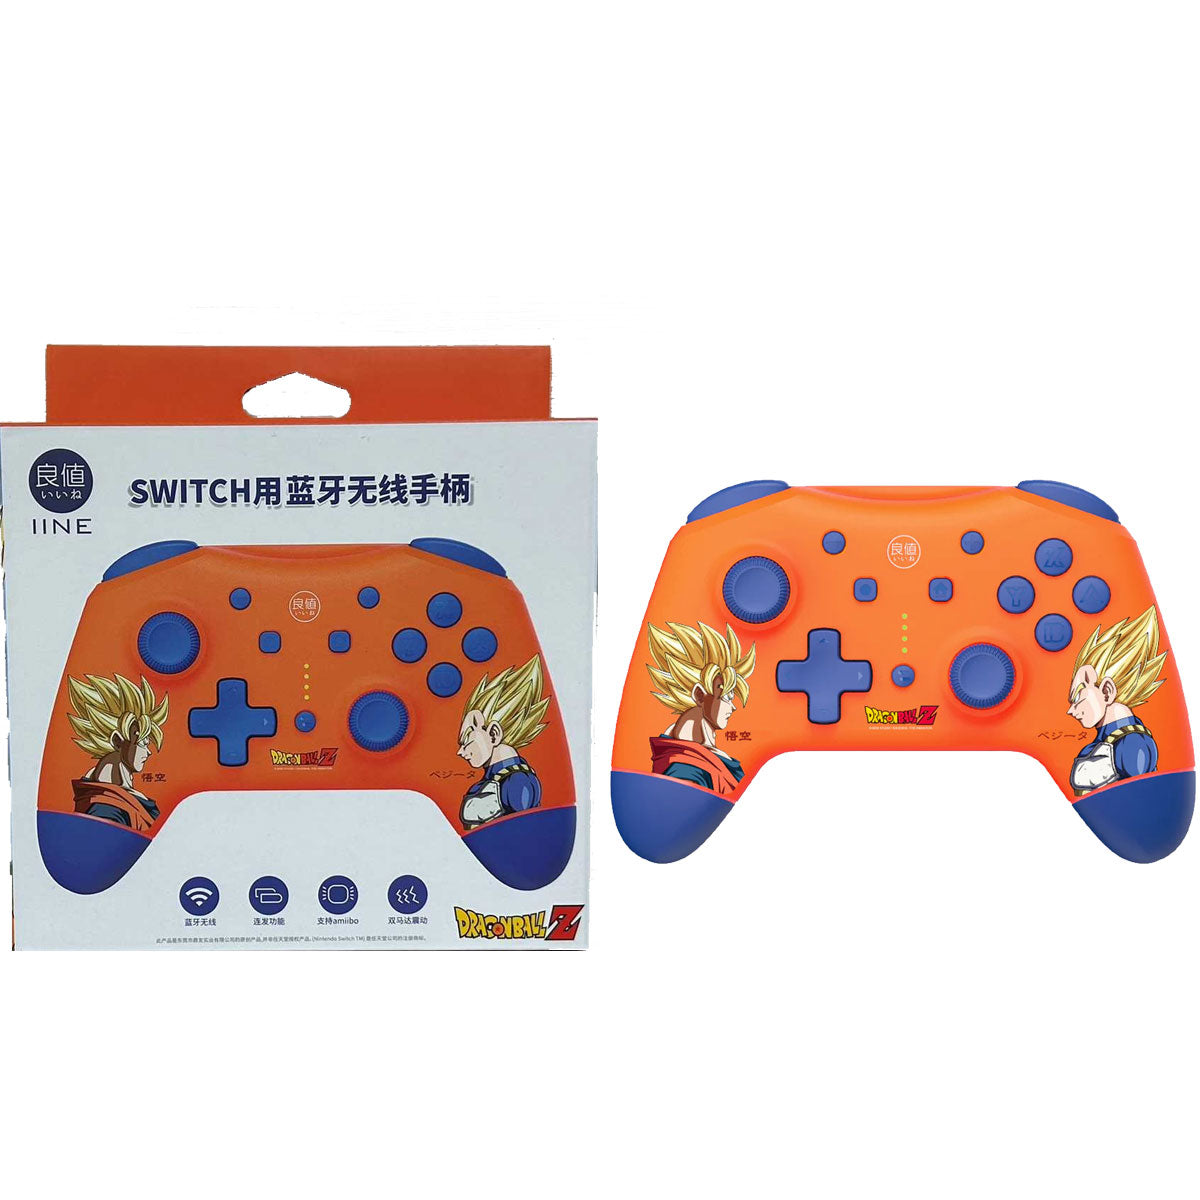 IINE Dragon Ball Z Edition Wireless Controller for Nintendo Switch 